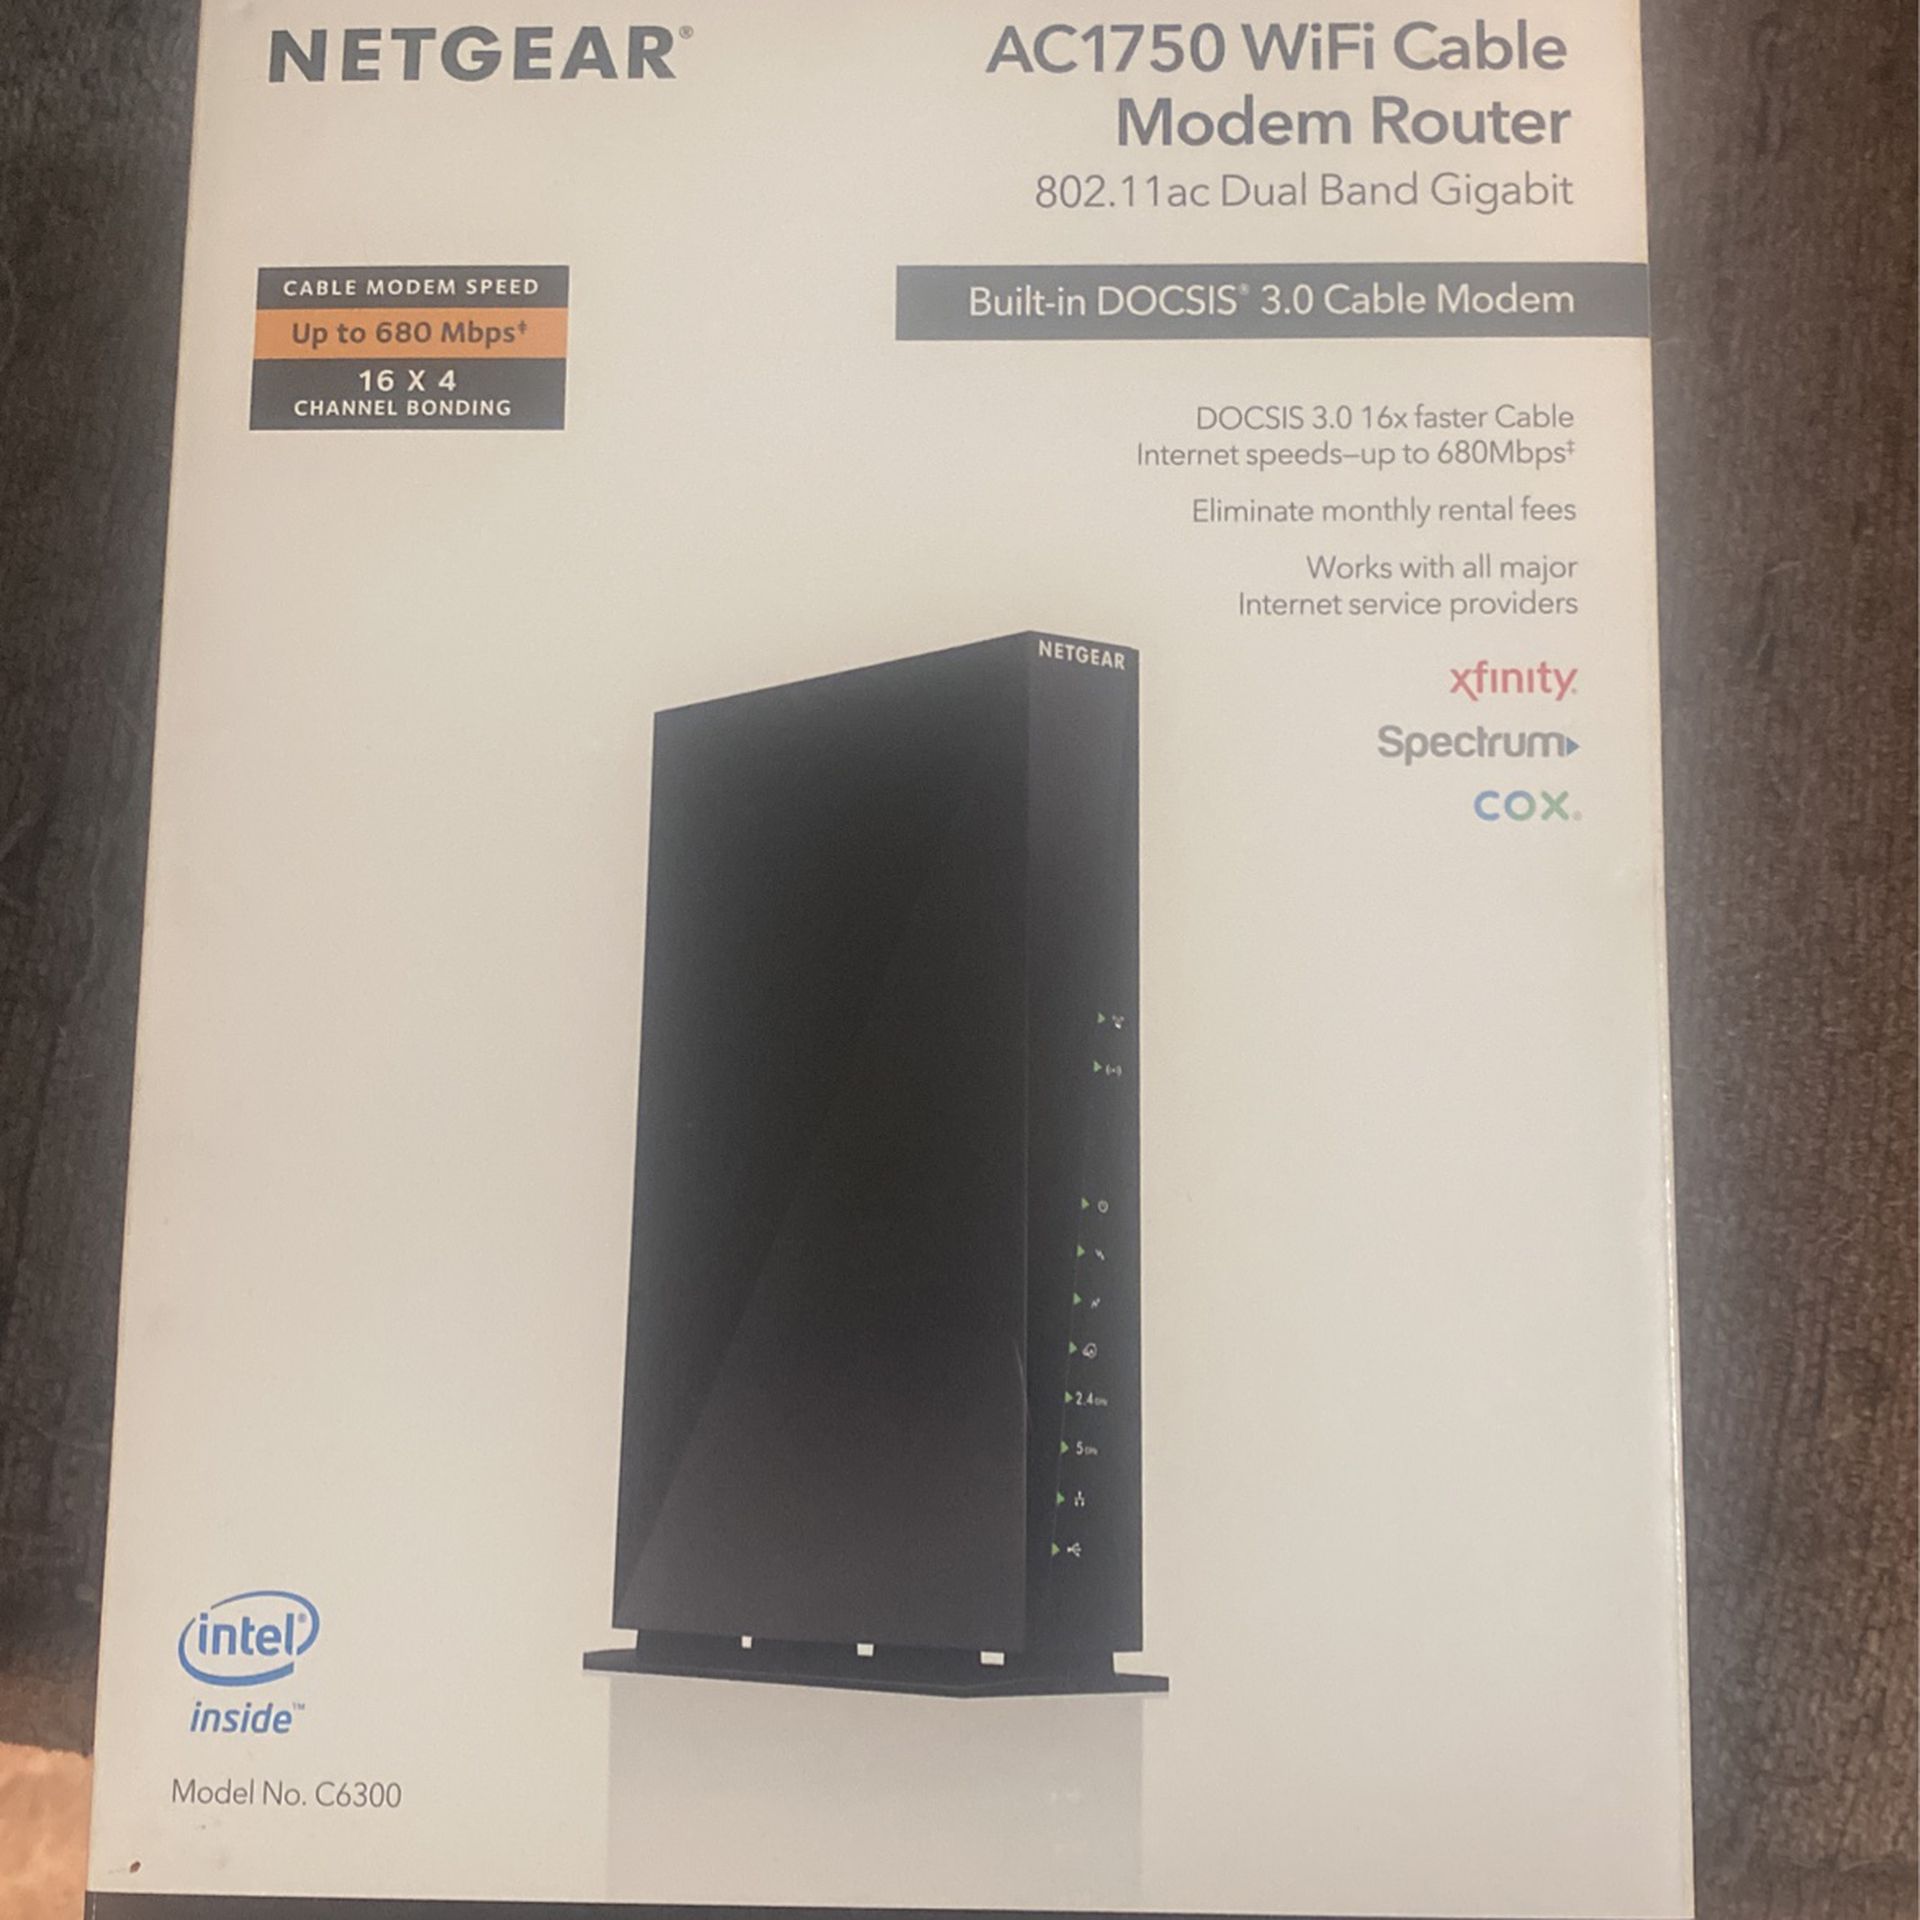 NETGEAR AC1750 WiFi Cable Modem Router 802.11ac Dual Band Gigabit